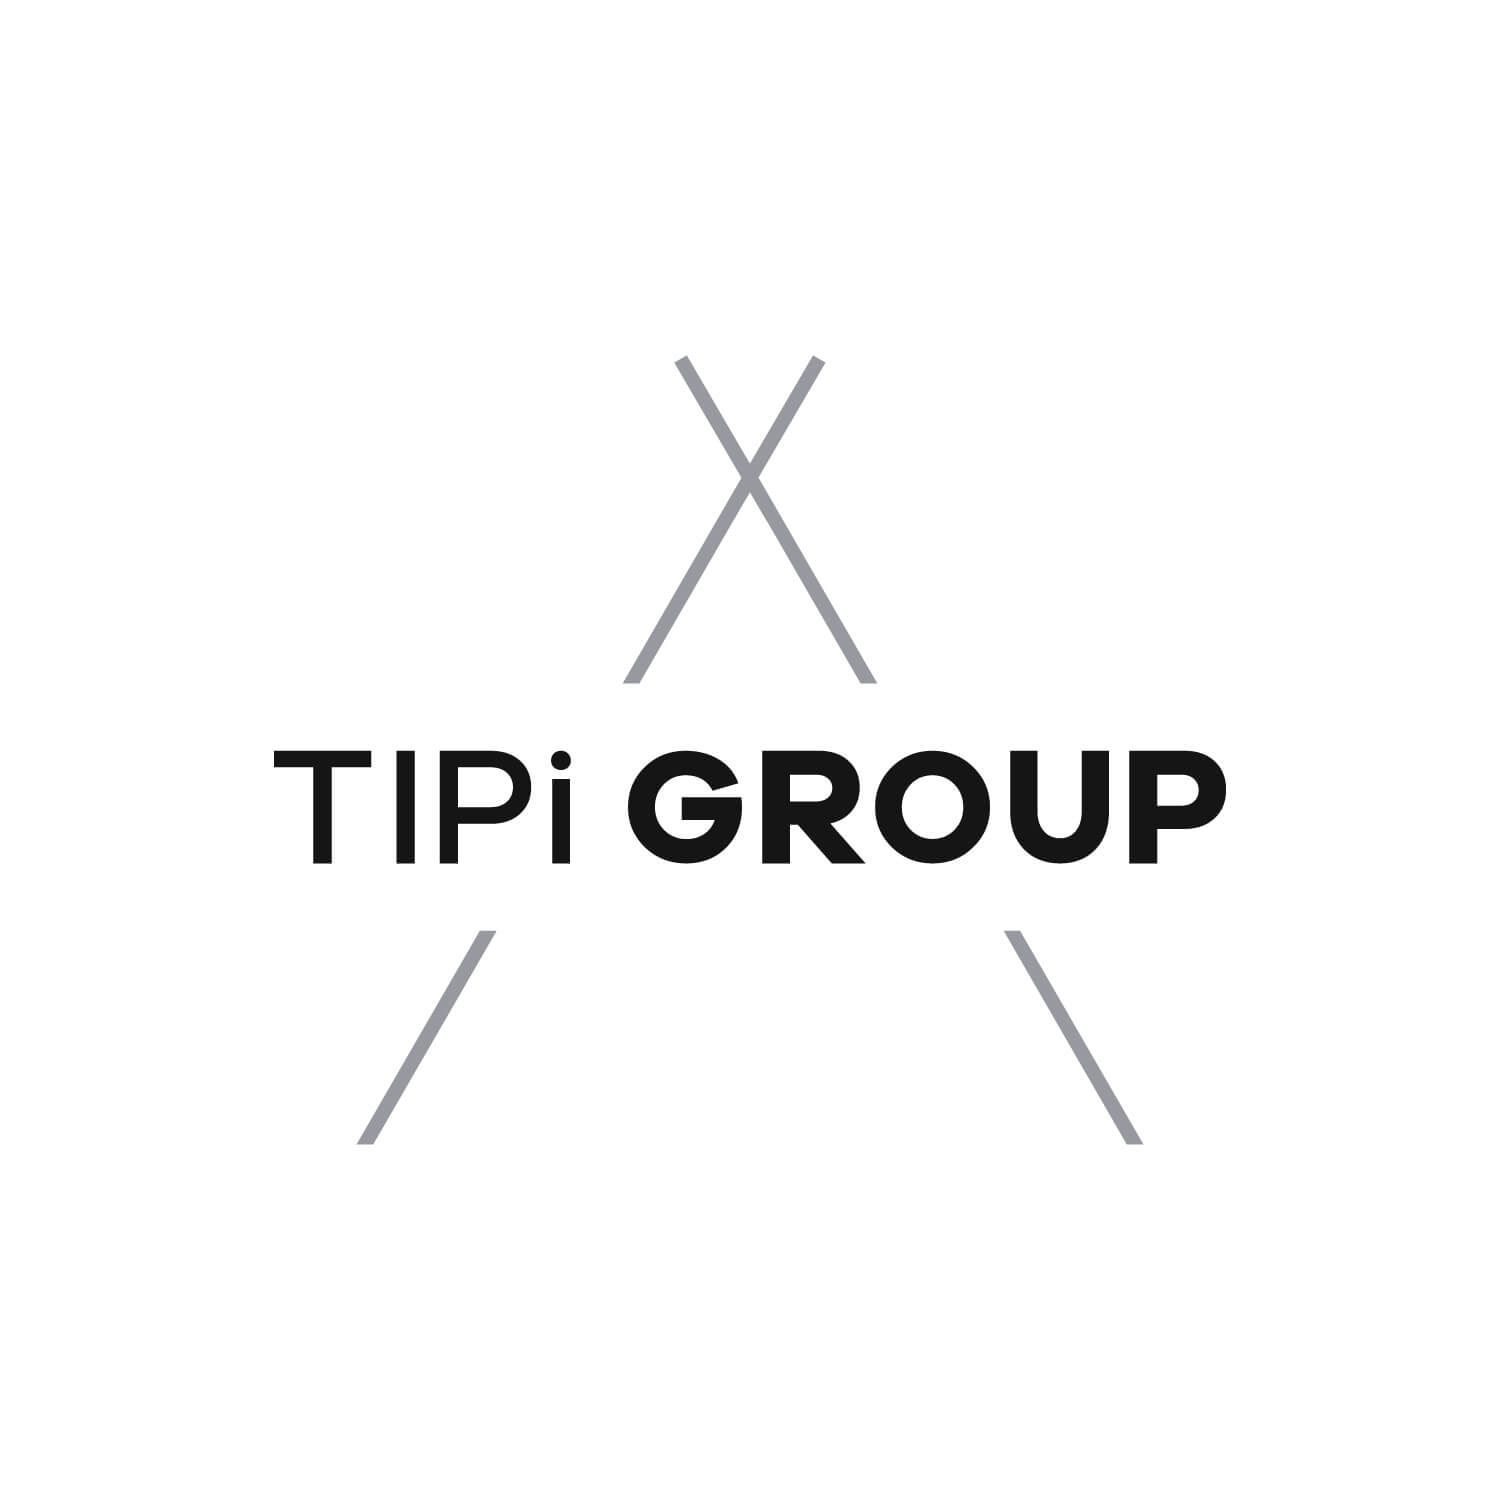 TIPI Group